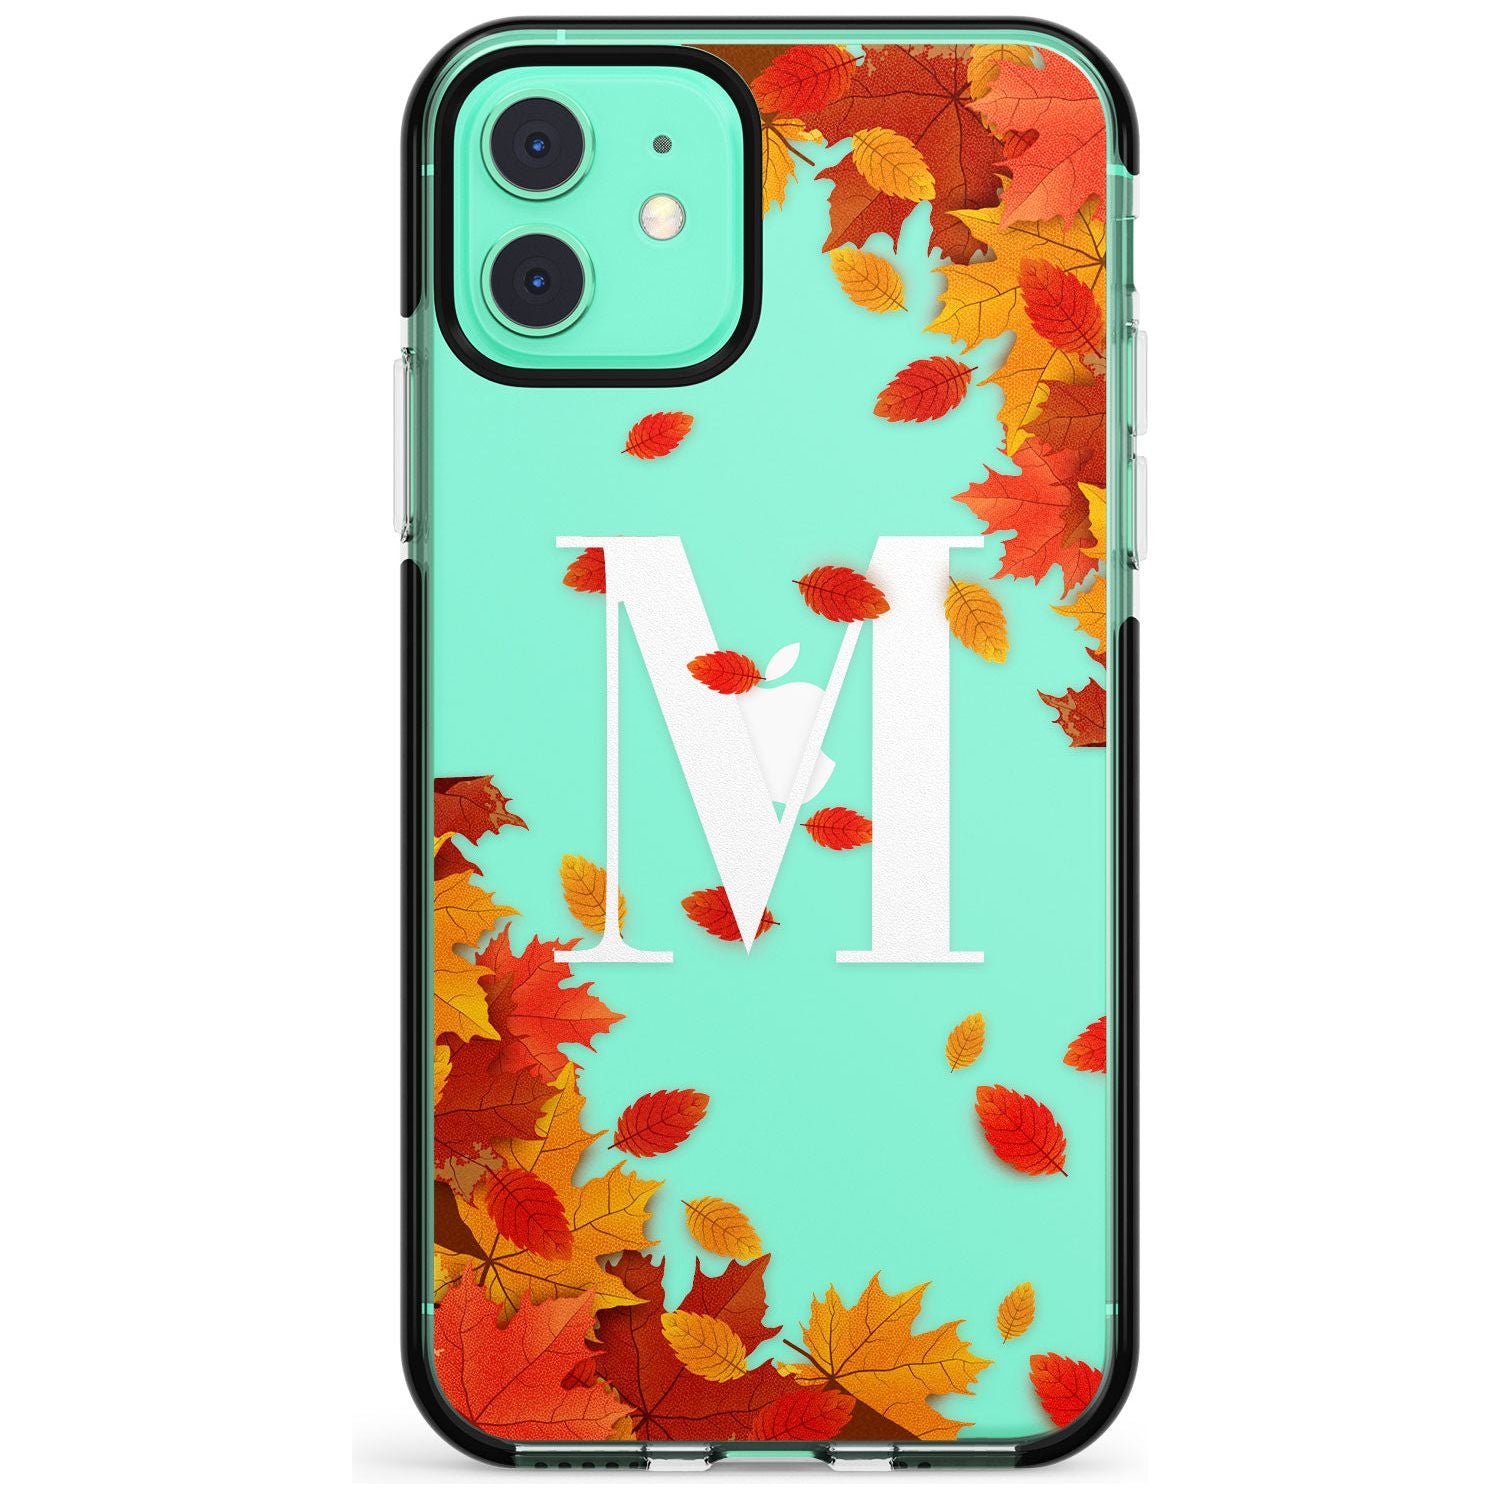 Personalised Monogram Autumn Leaves Black Impact Phone Case for iPhone 11 Pro Max